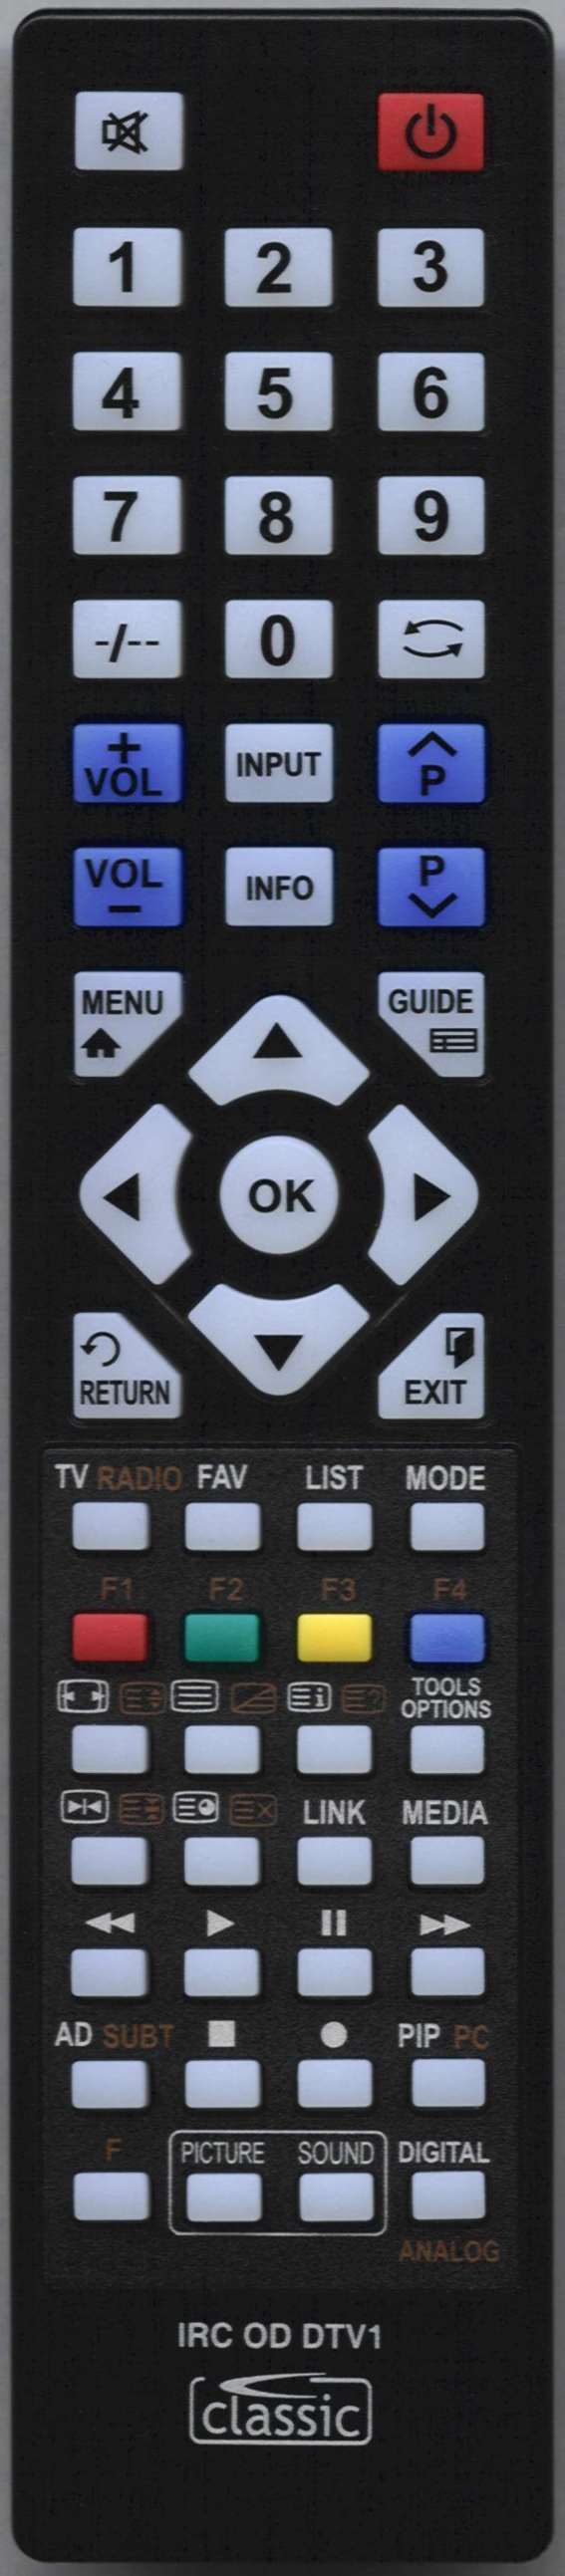 SEIKI SE32HO05UK Remote Control